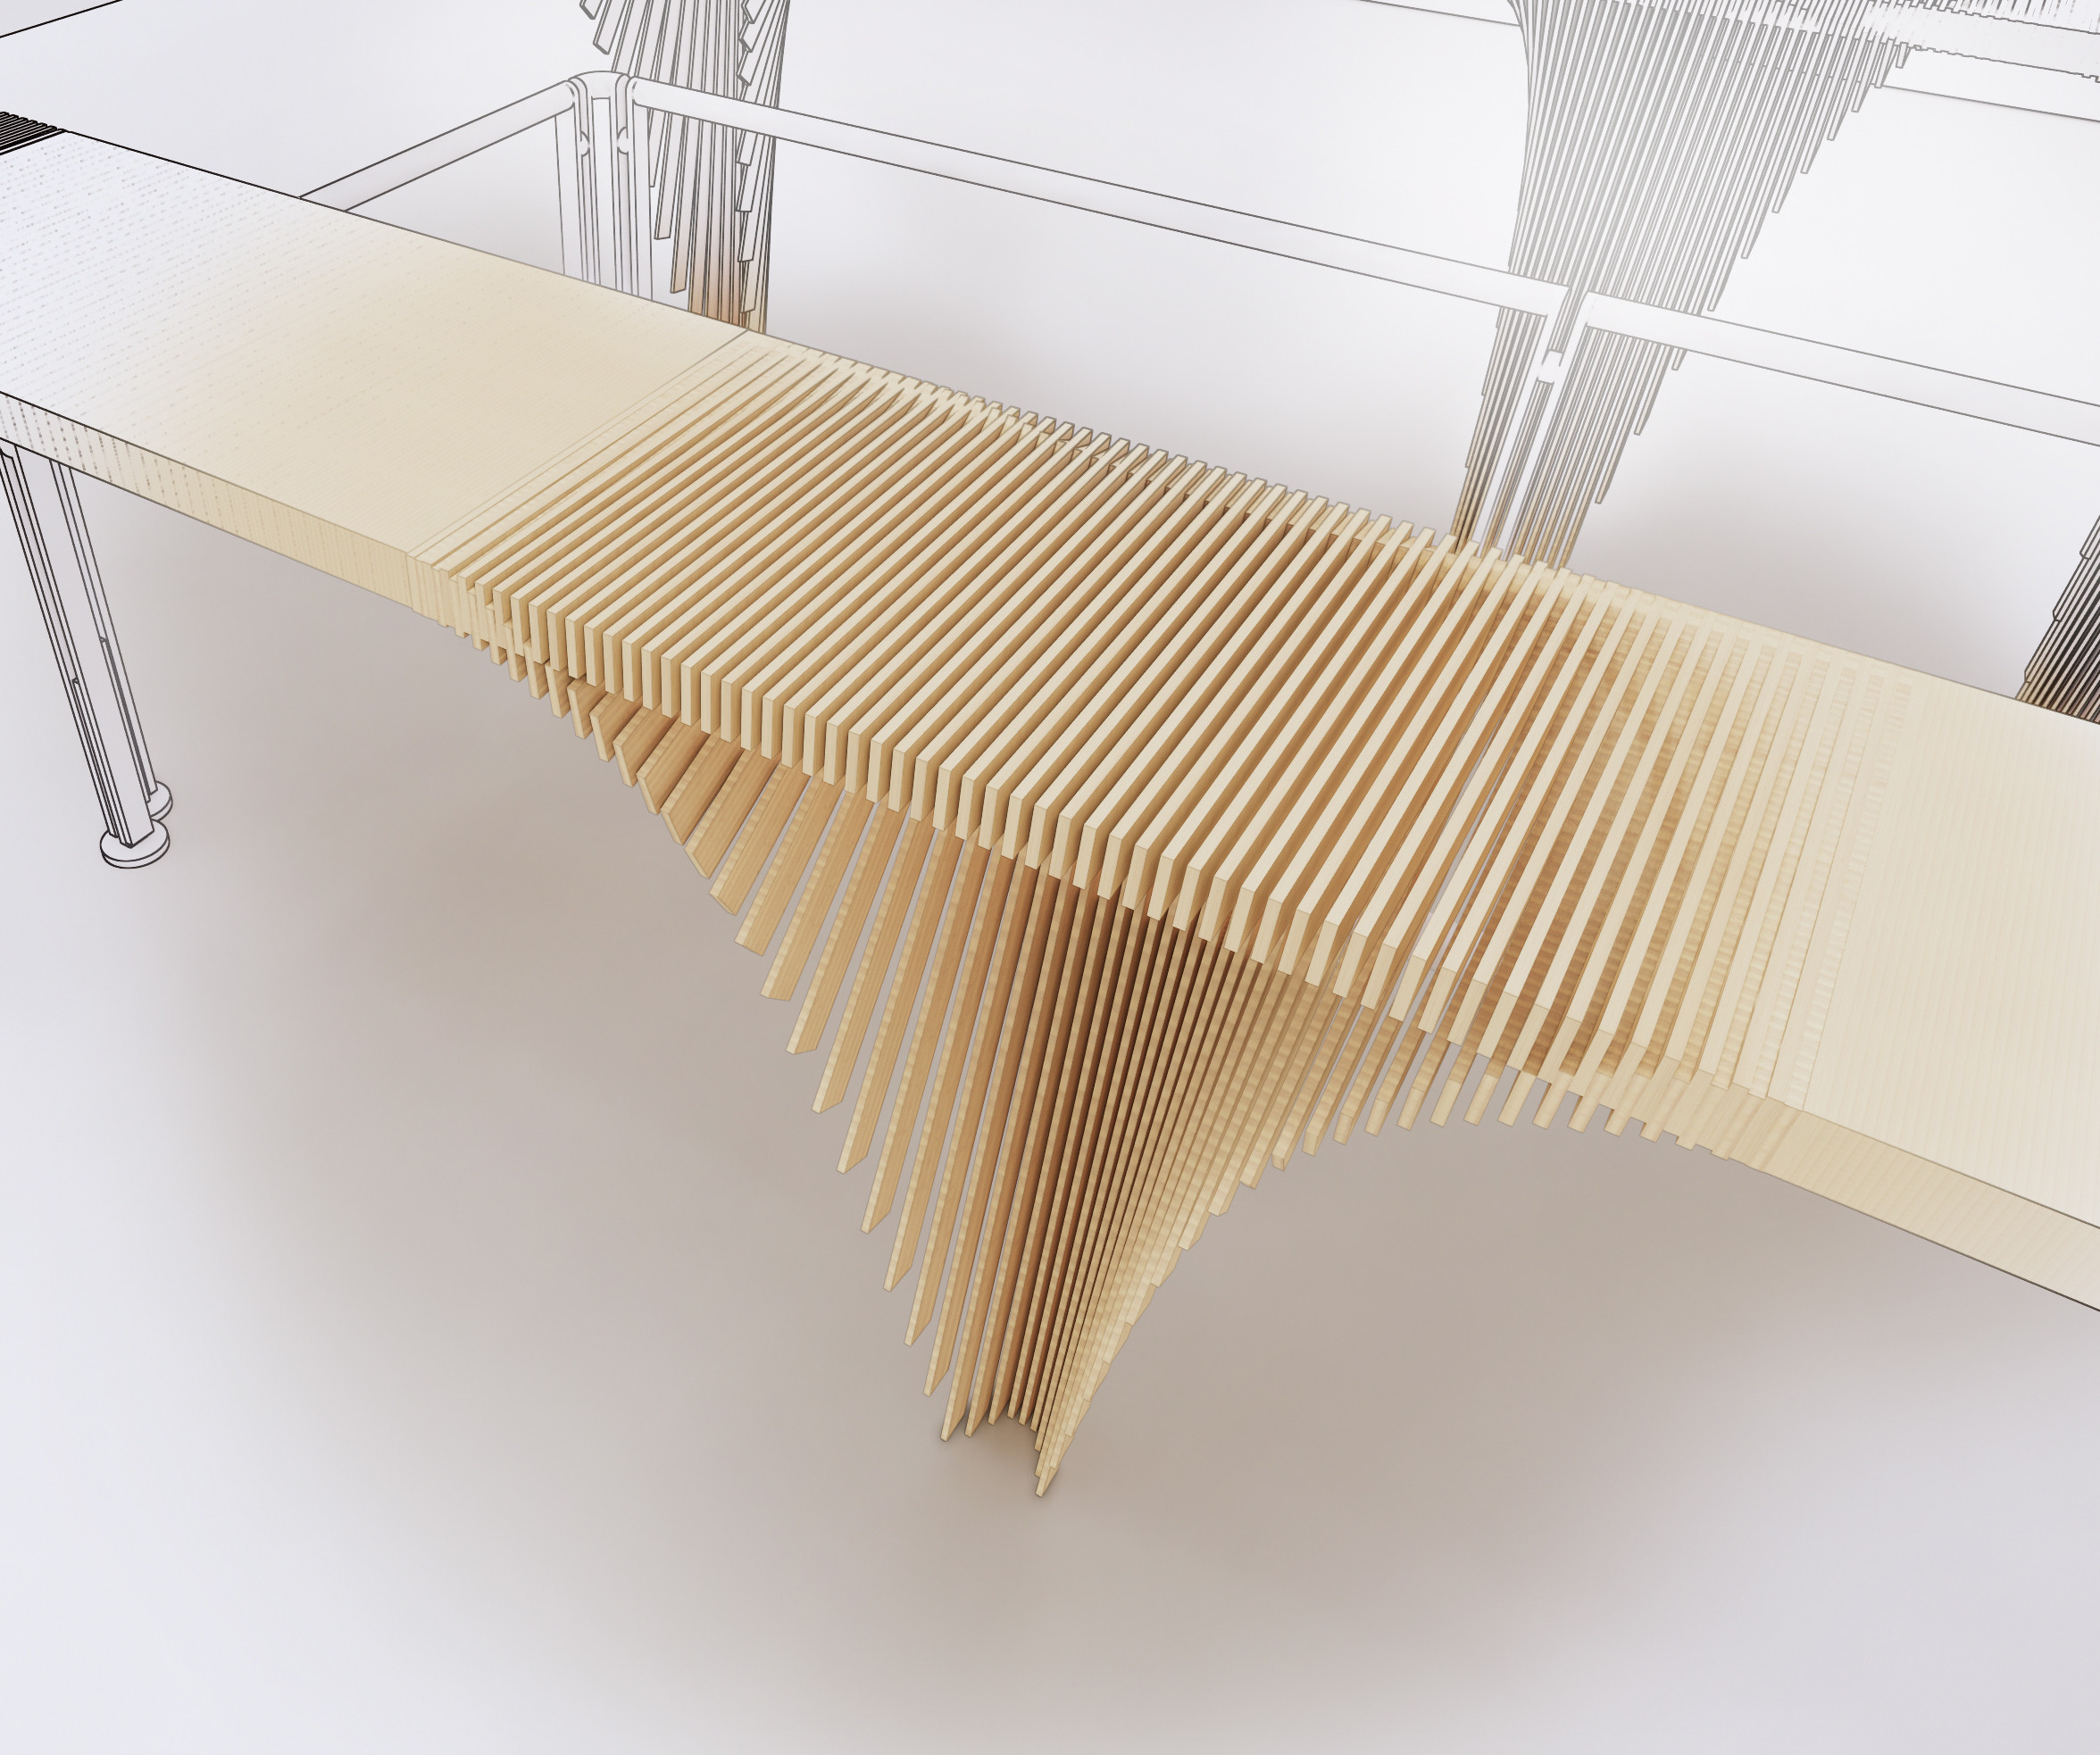 Parametric Furniture Design